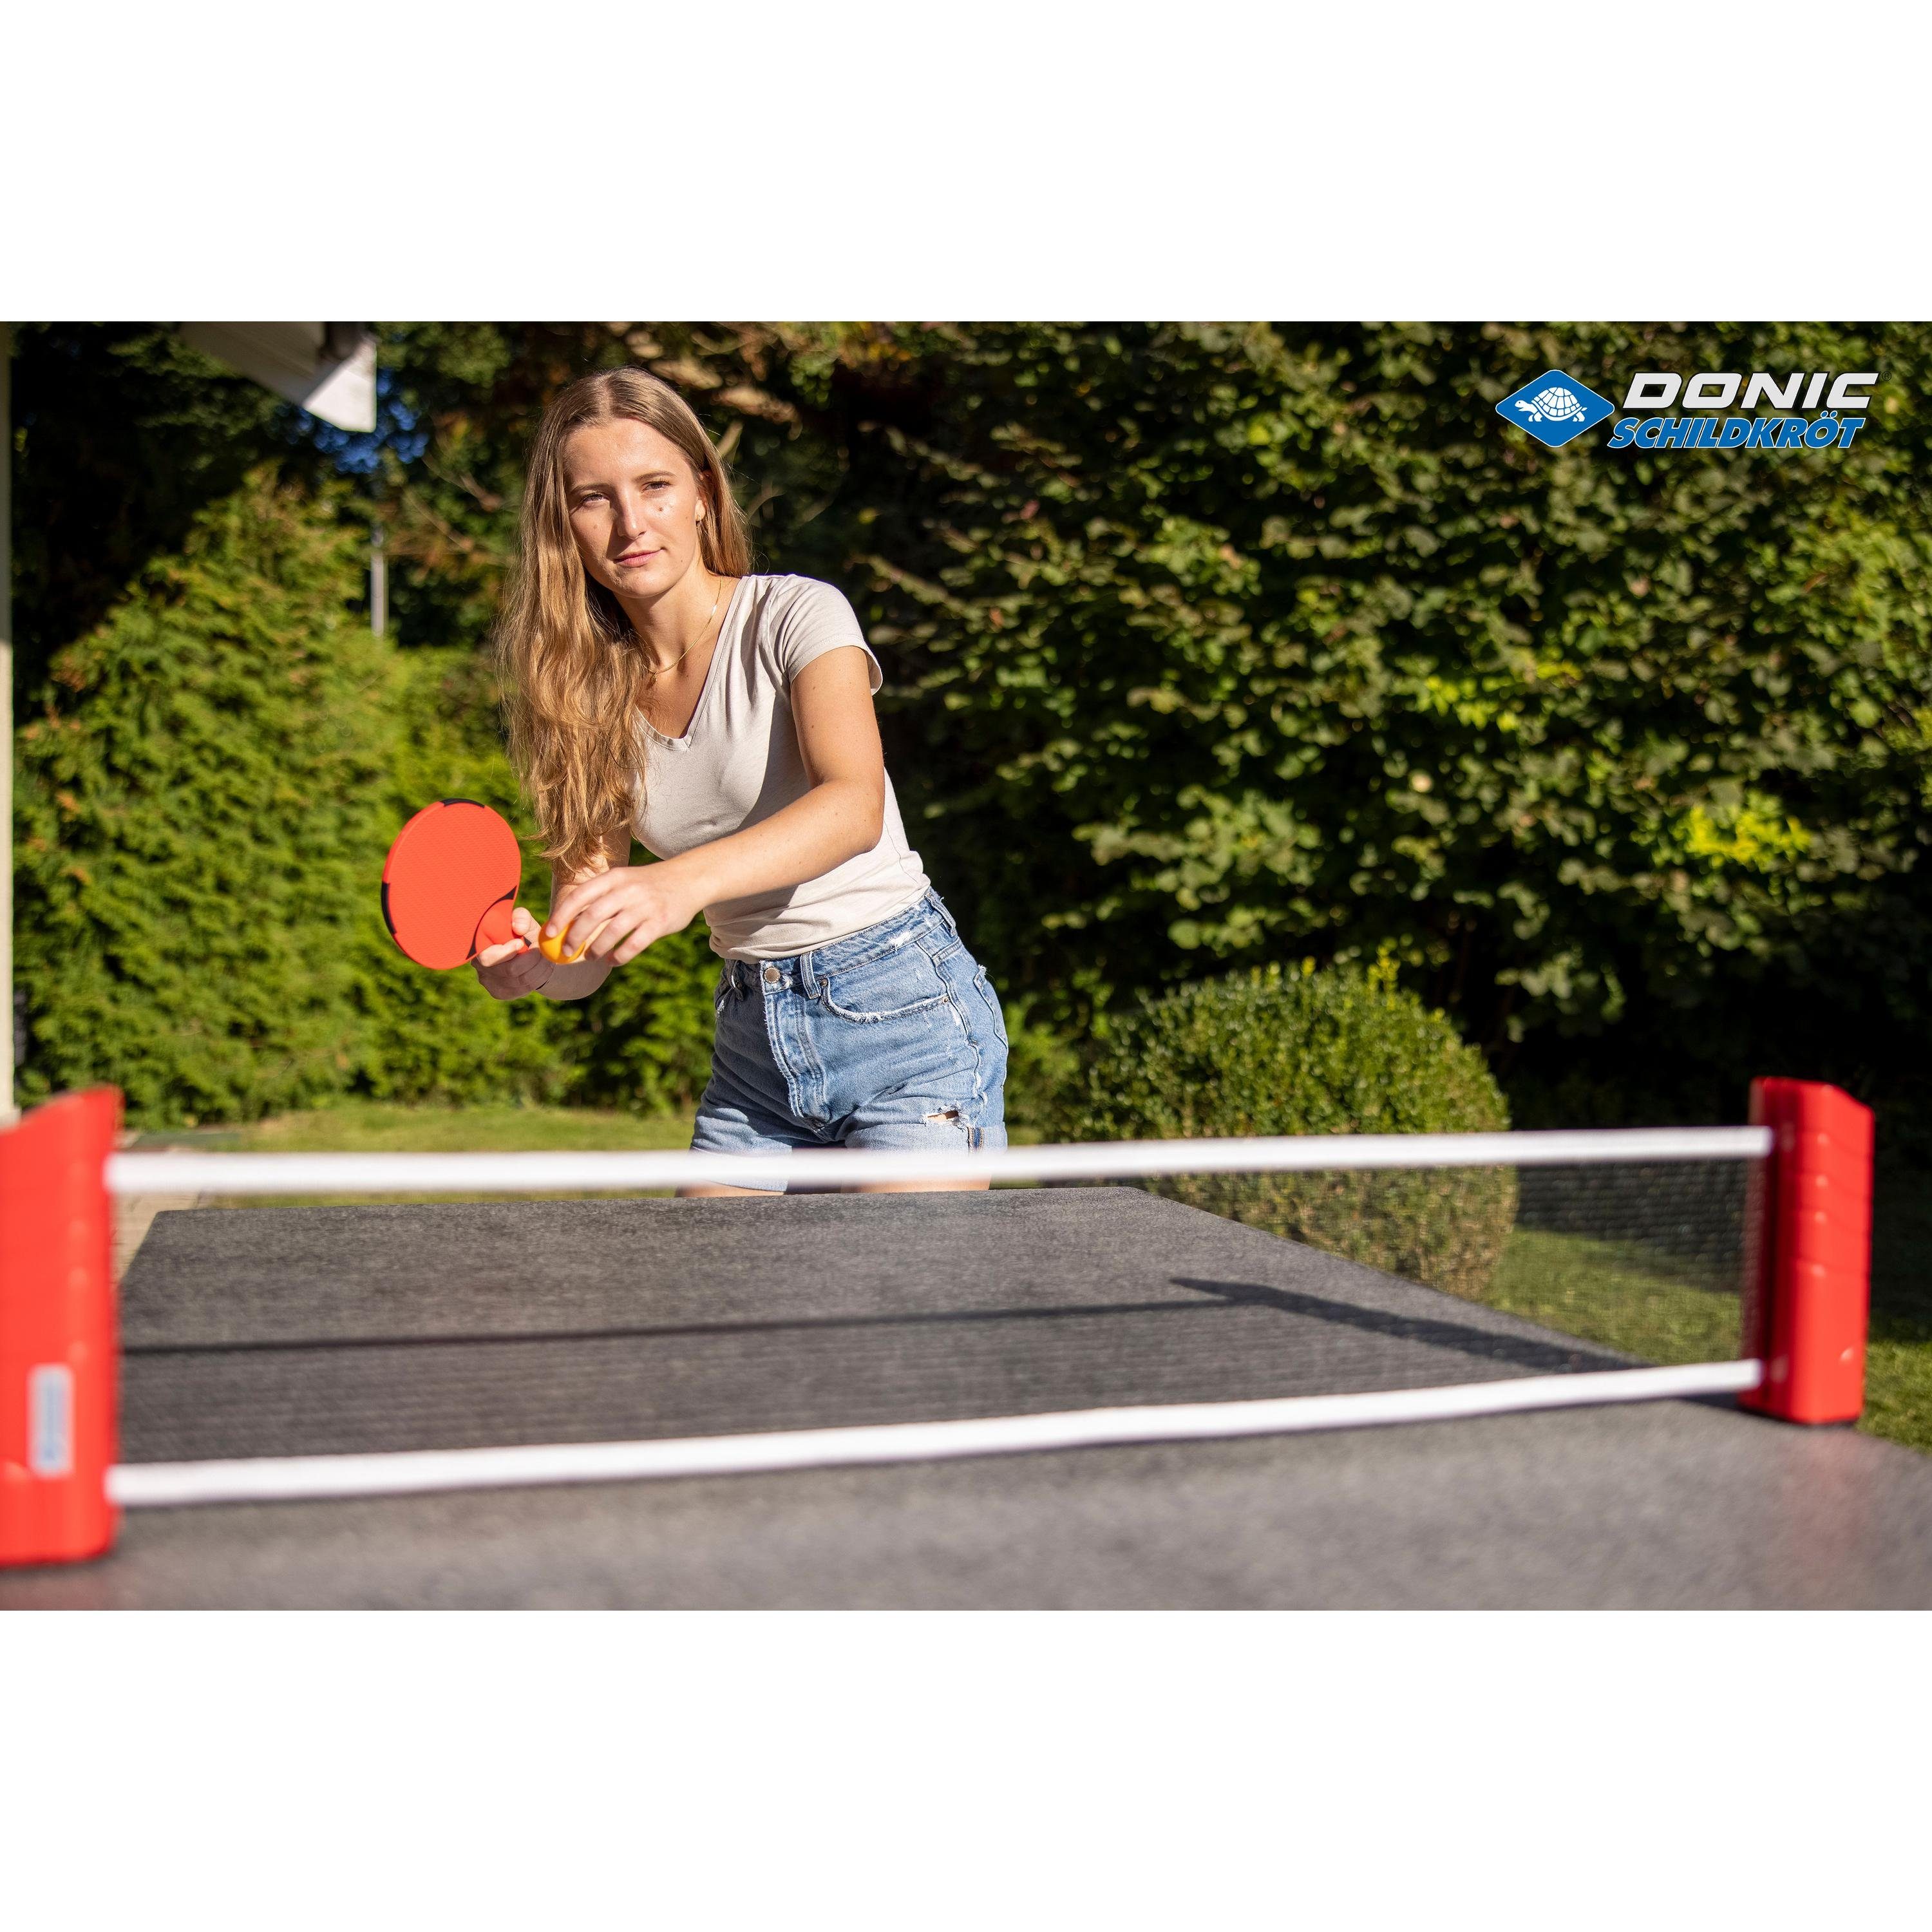 Donic-Schildkröt Outdoor Tischtennisschläger Set Flex TT